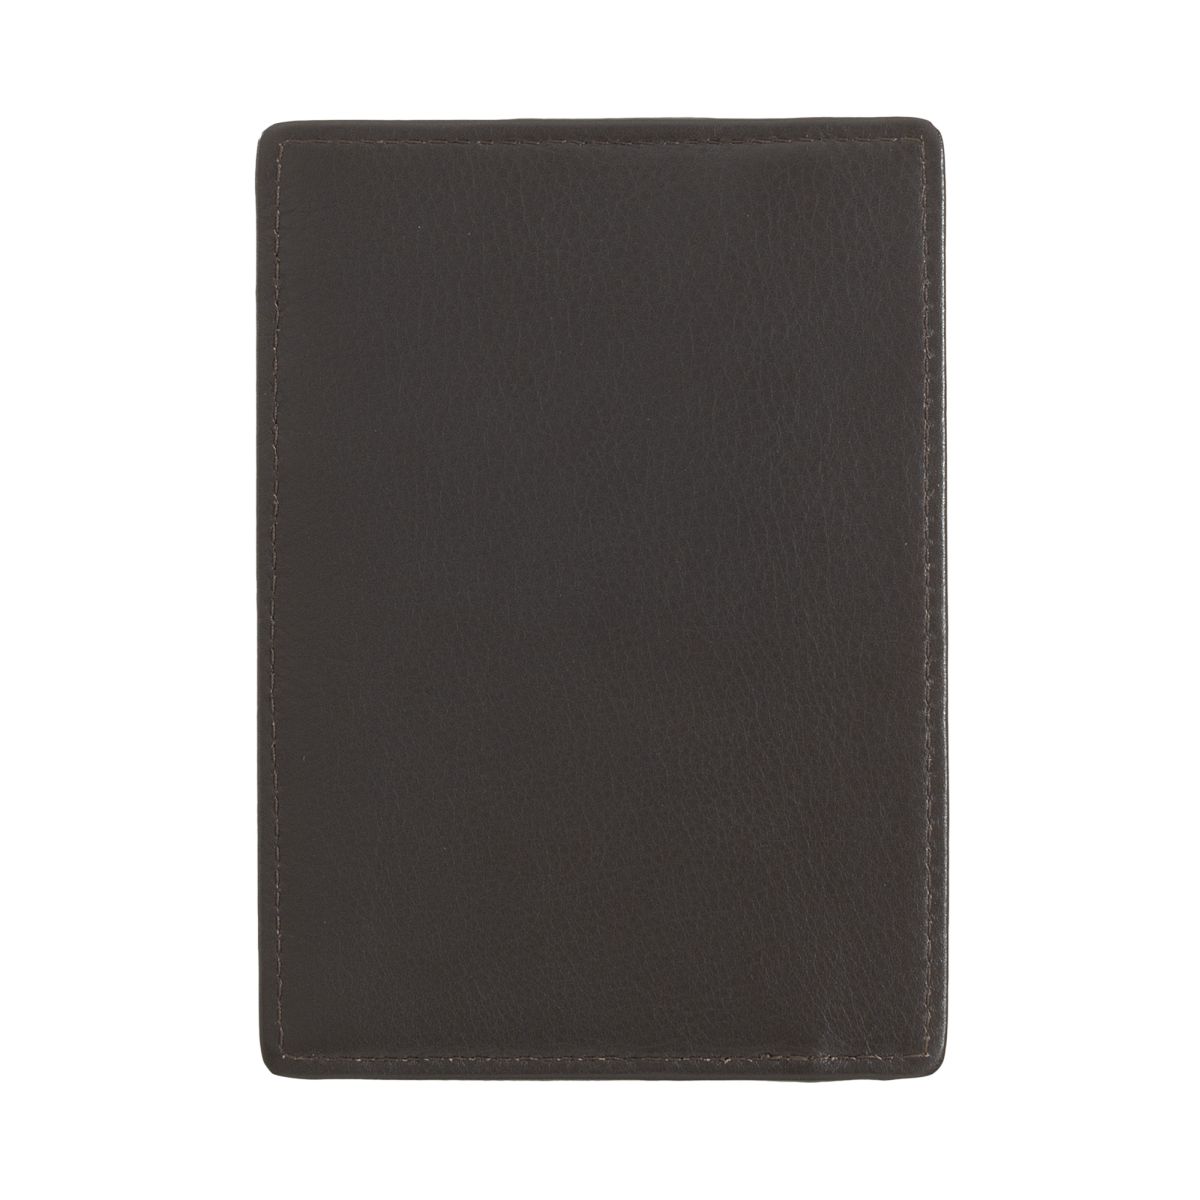 DuDu Compact multi color credit card holder wallet - Dark Brown